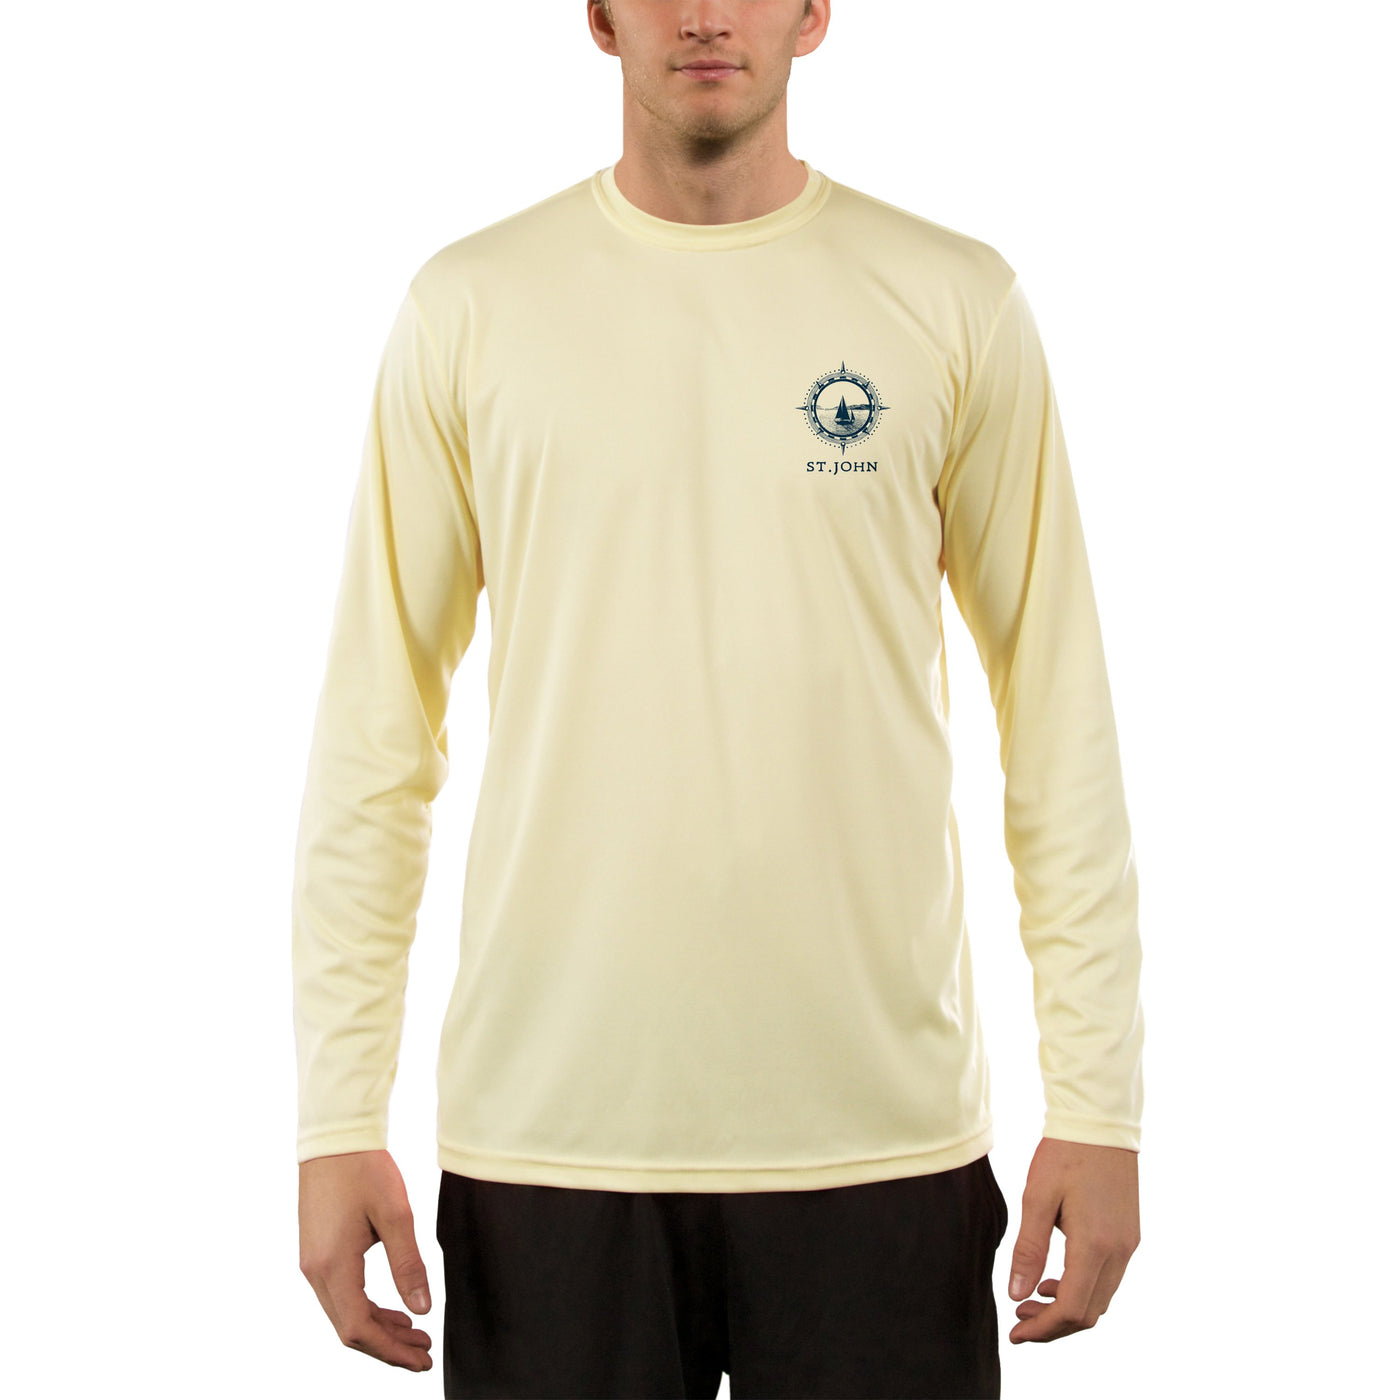 Compass Vintage St.John Men's UPF 50+ Long Sleeve T-Shirt